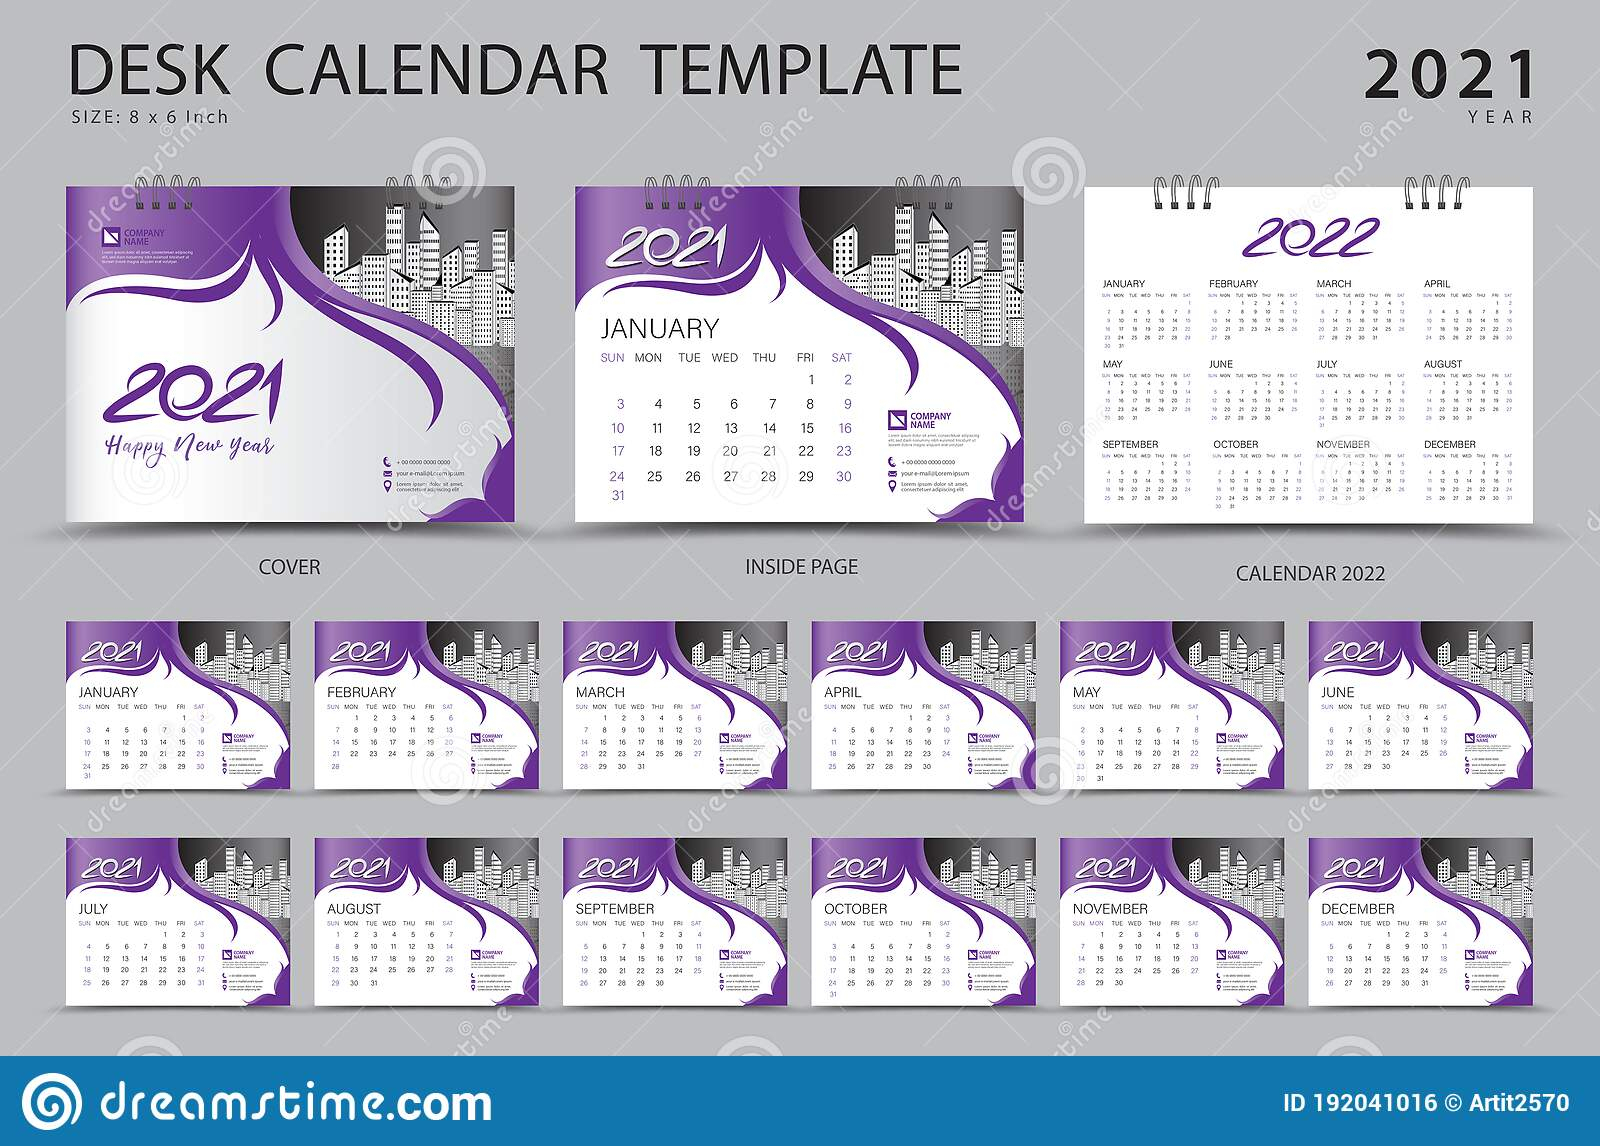 Desk Calendar 2021 Set Template With Calendar 2022 Design